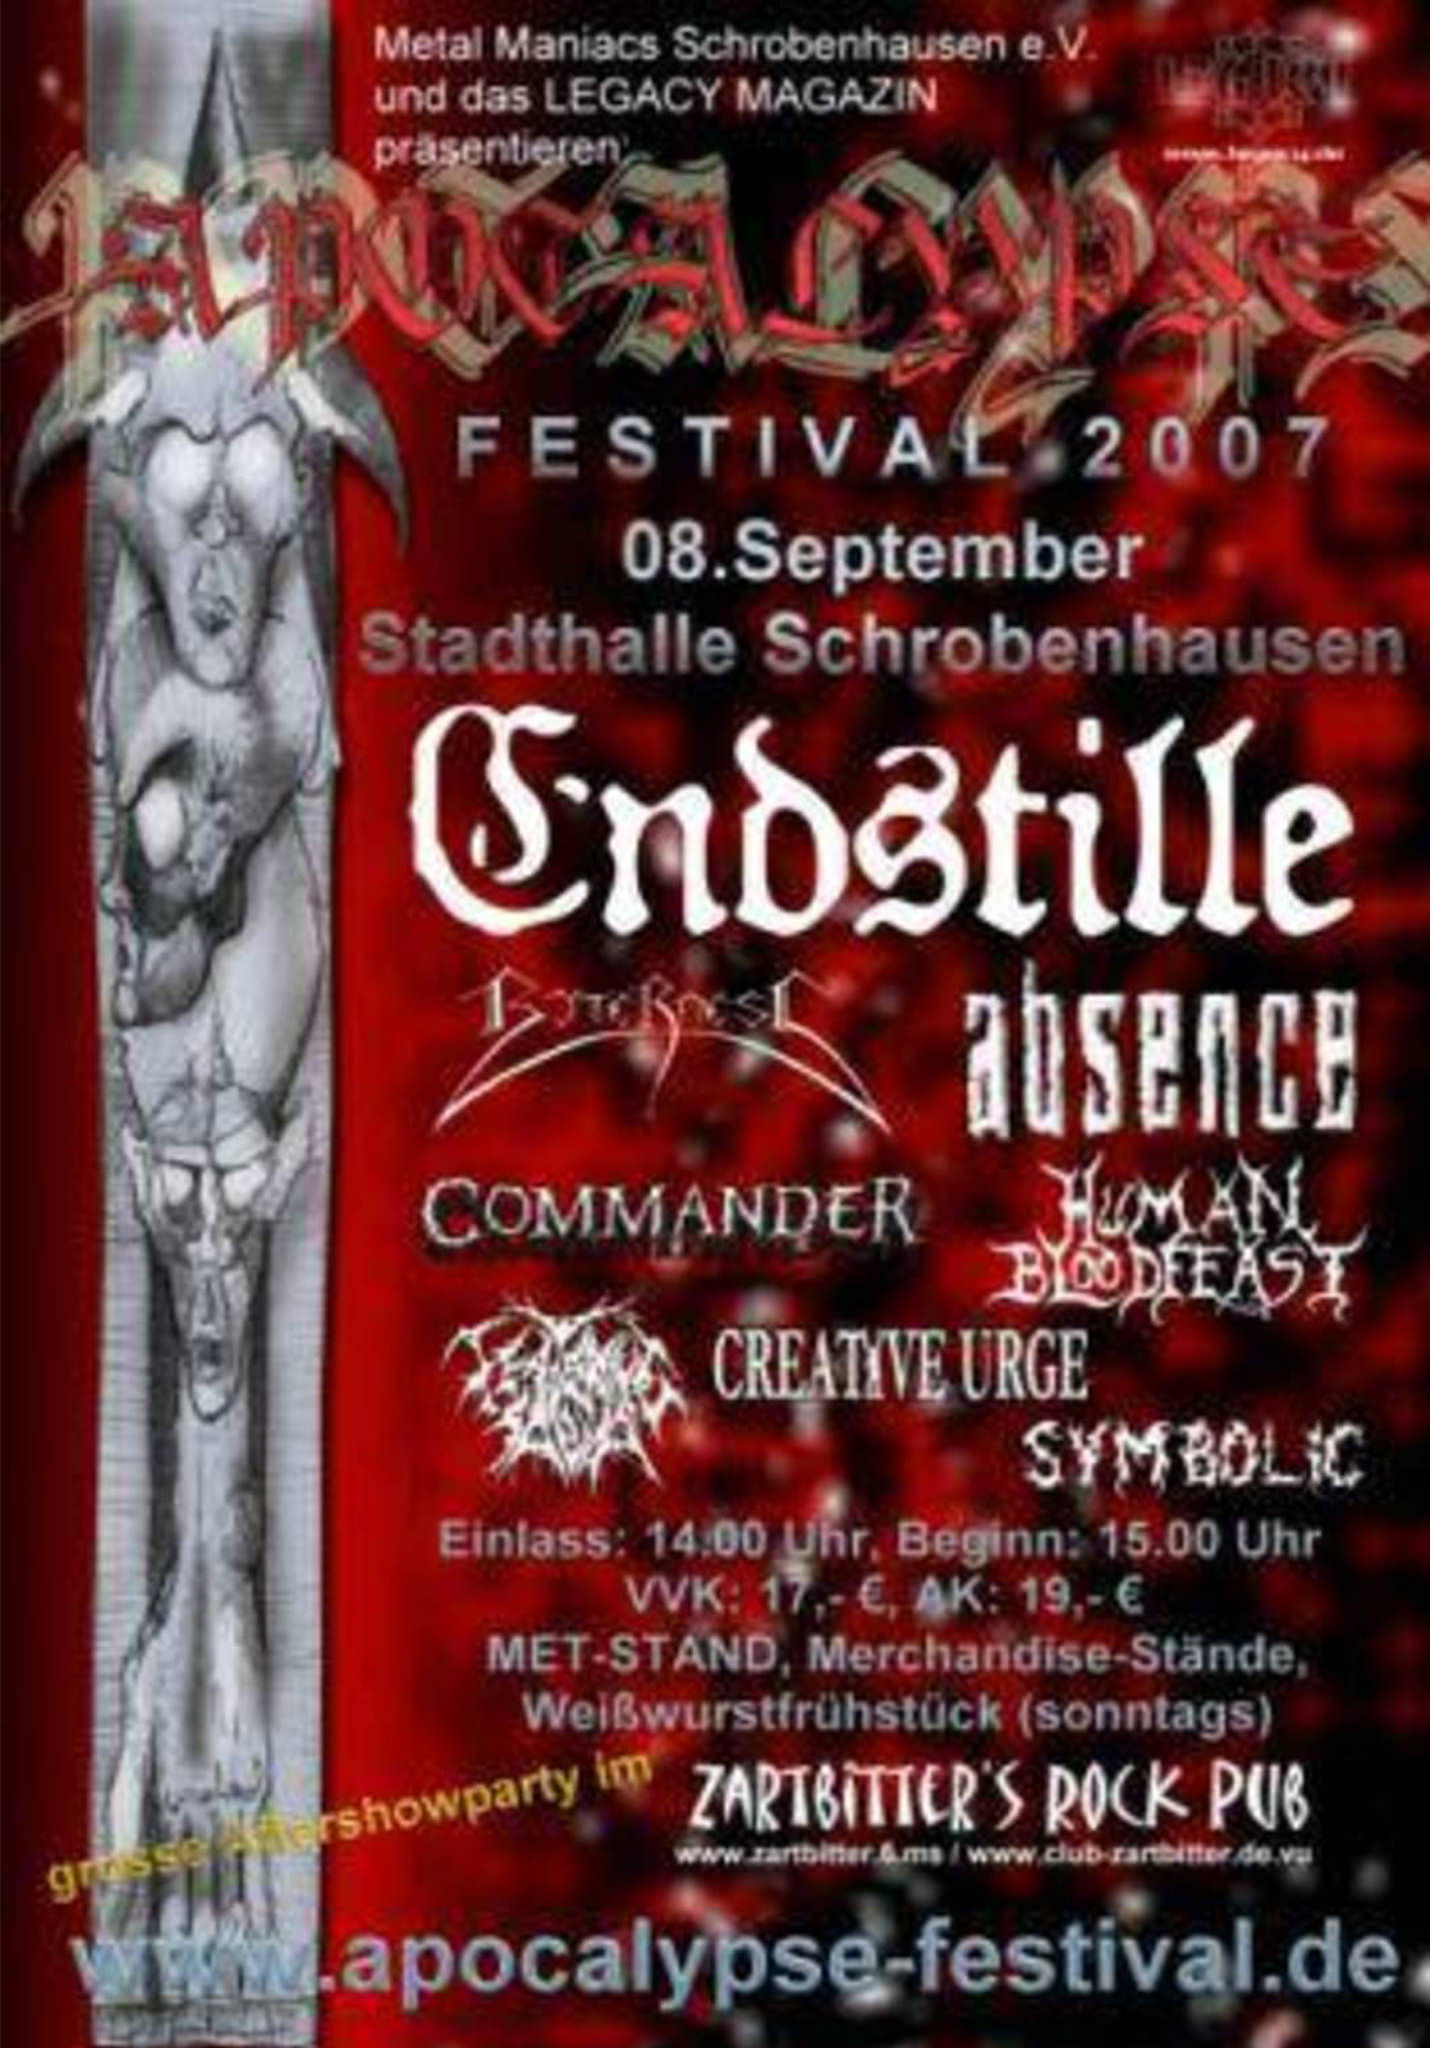 Apocalypse Festival 2007